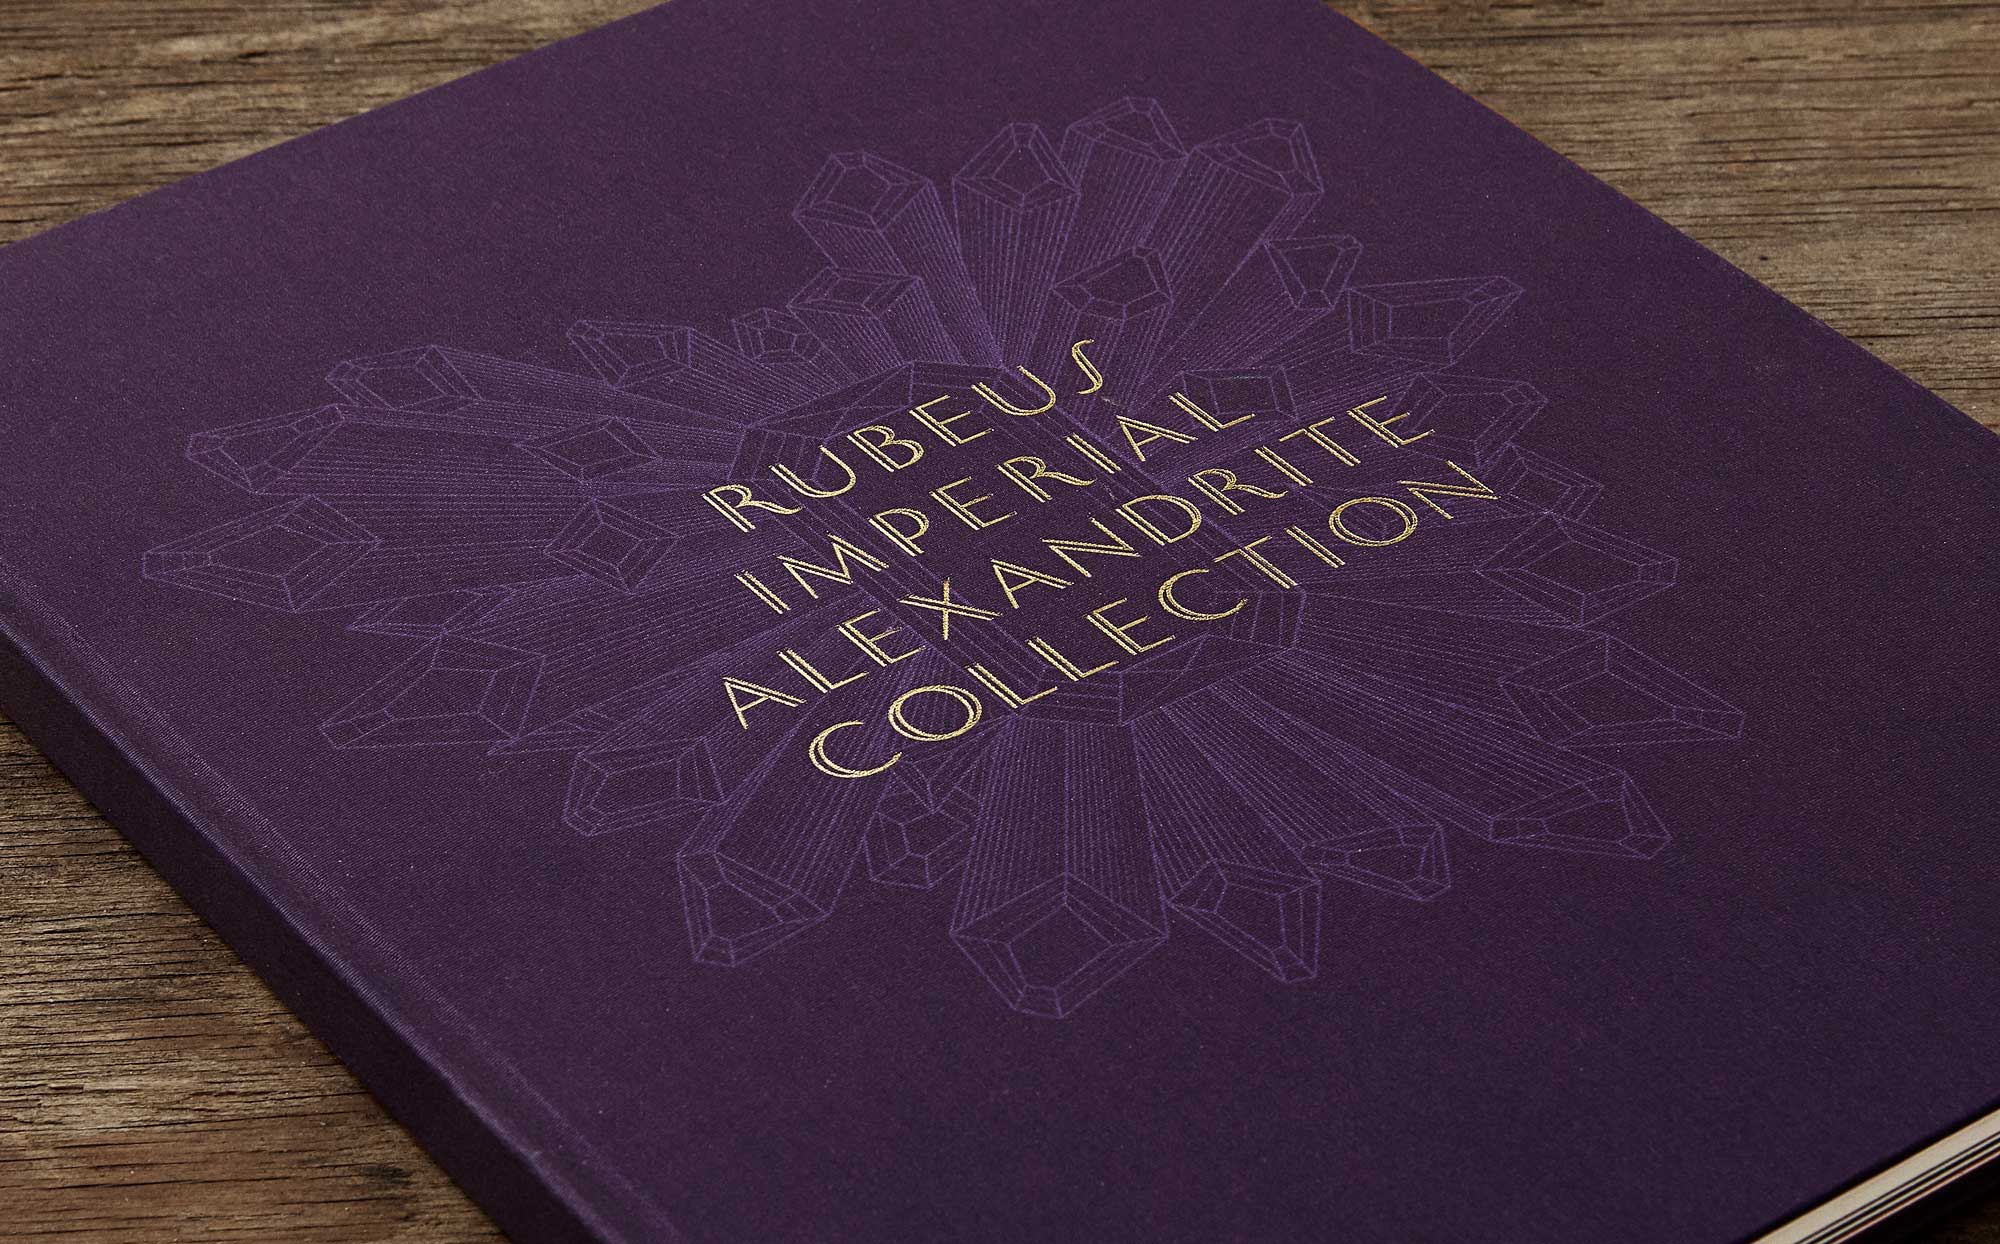 Branding and corporate identity for Rubeus Imperial Alexandrite Collection, Rubeus Milano, Ksenia Smirnova, 1503 Design